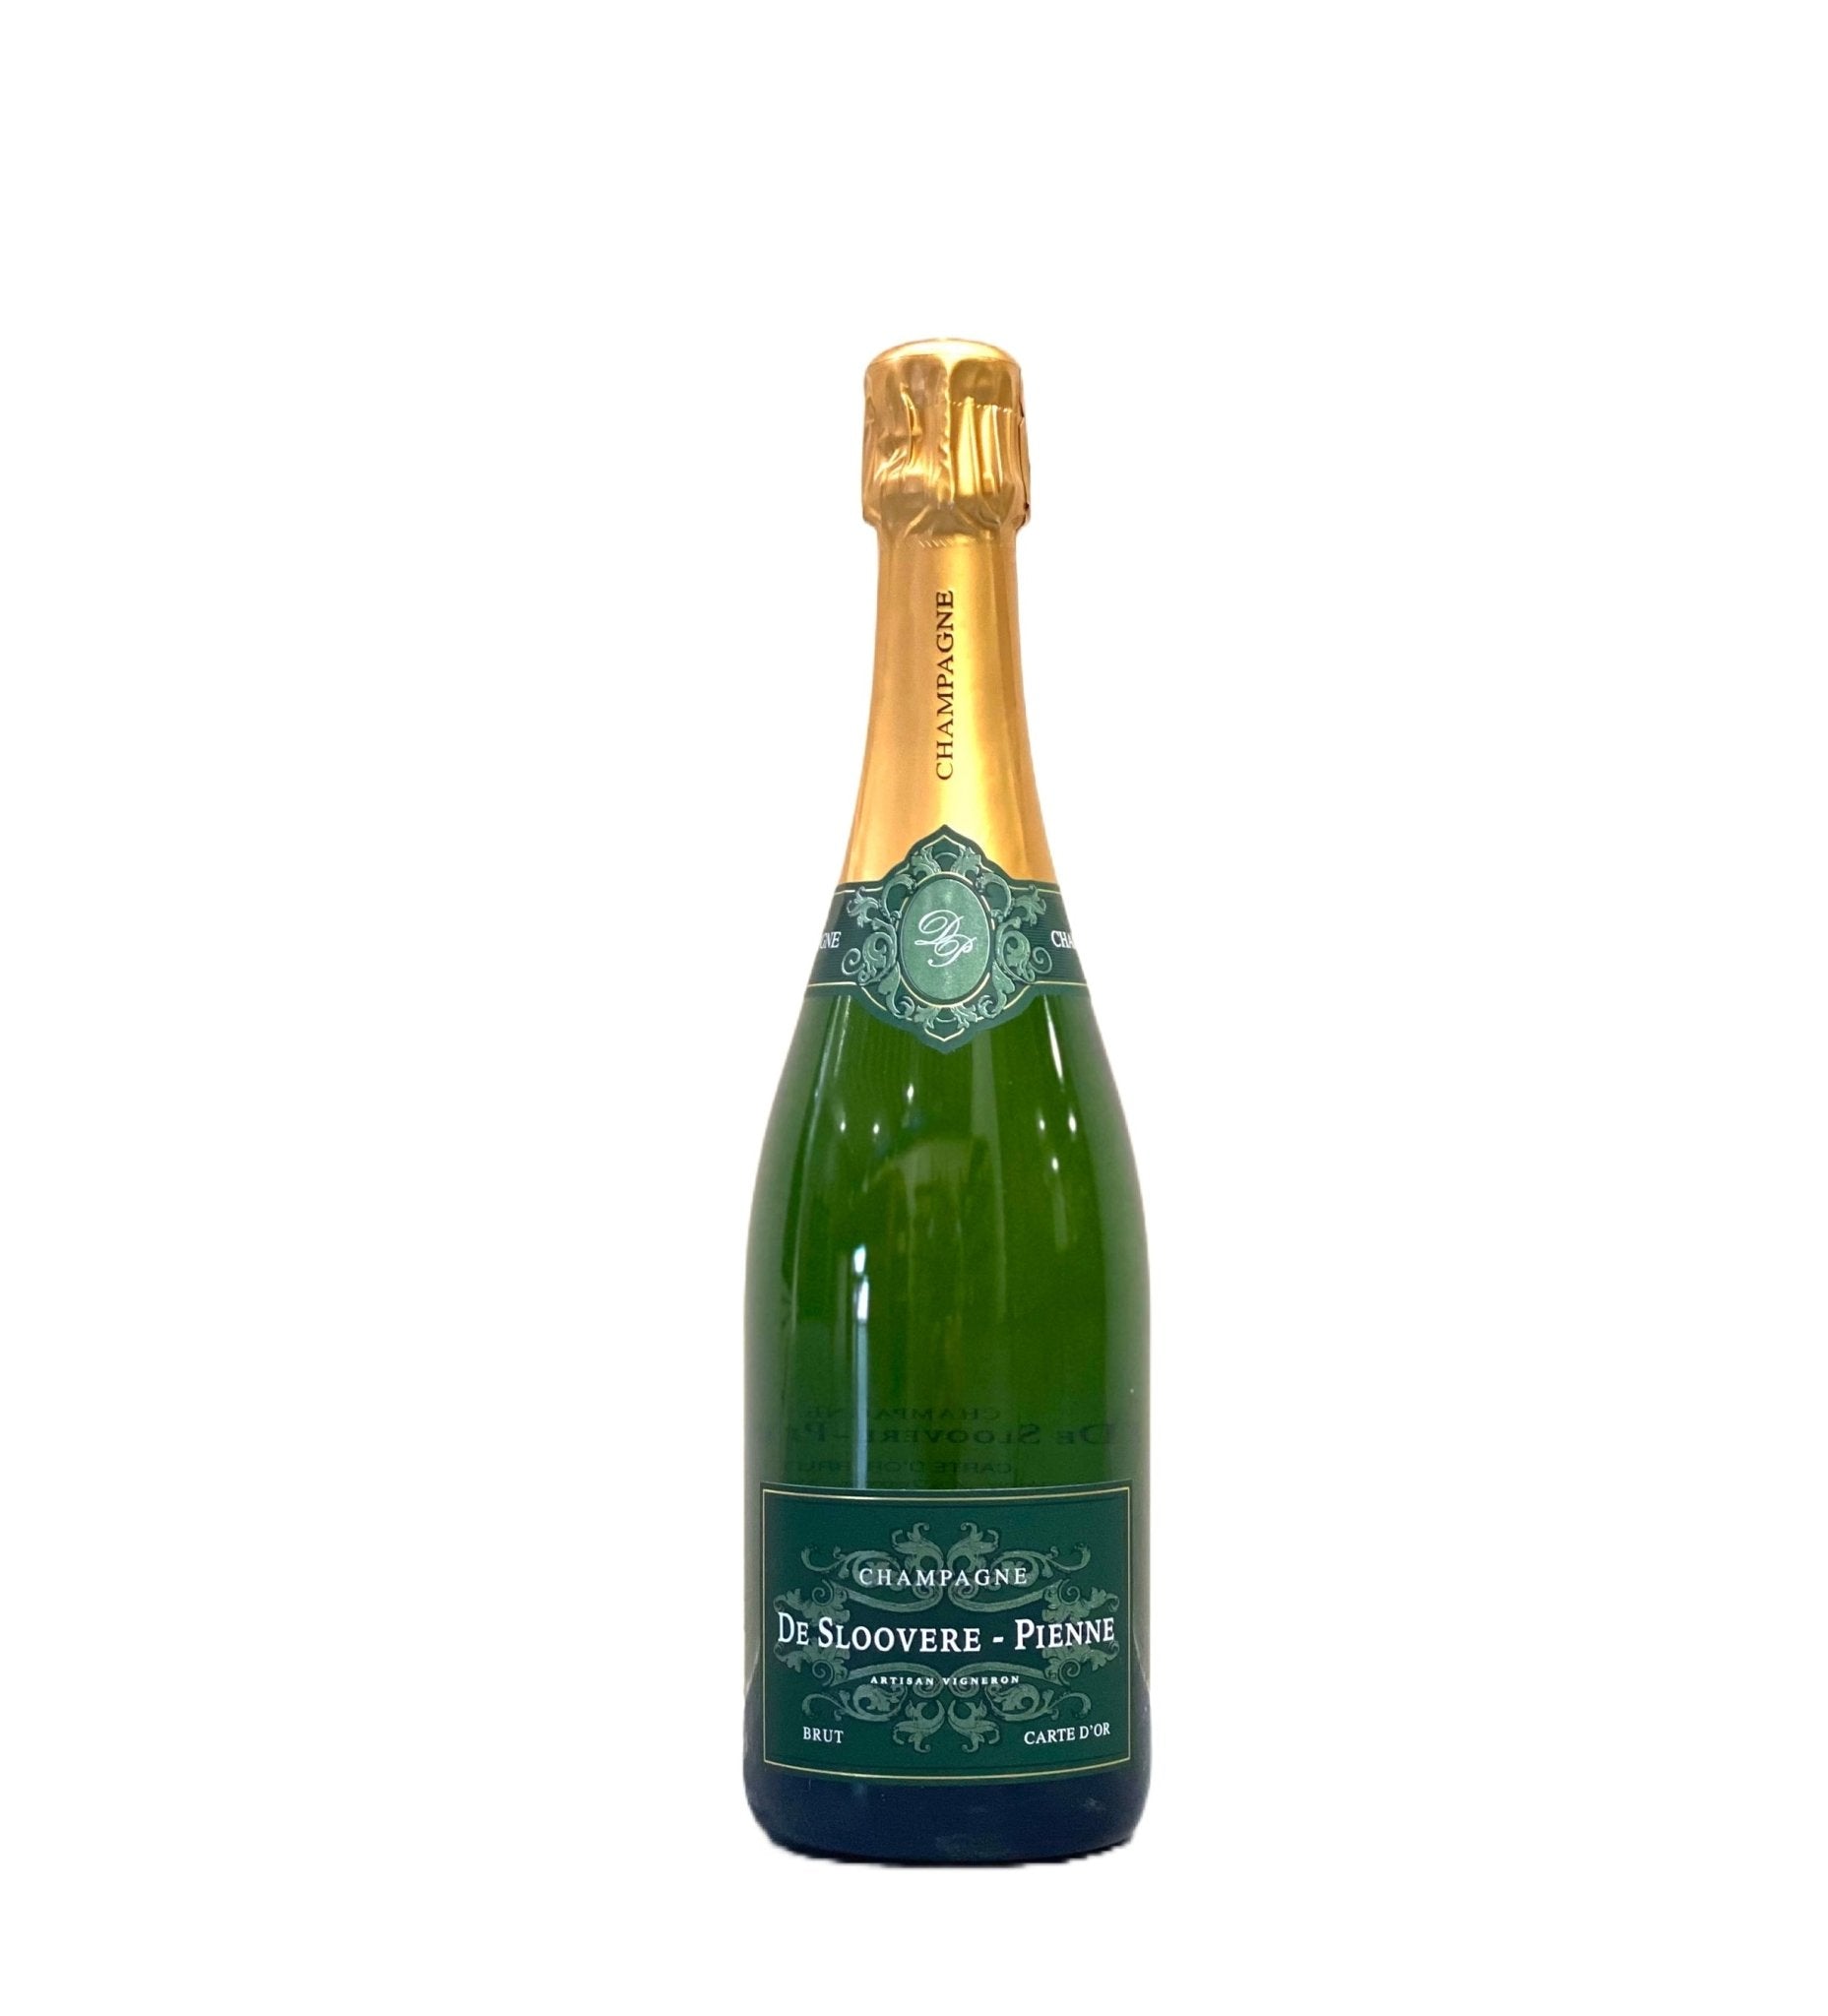 Champagne De Sloovere-Pienne Carte d'Or Brut - Bespoke Bar L.A.